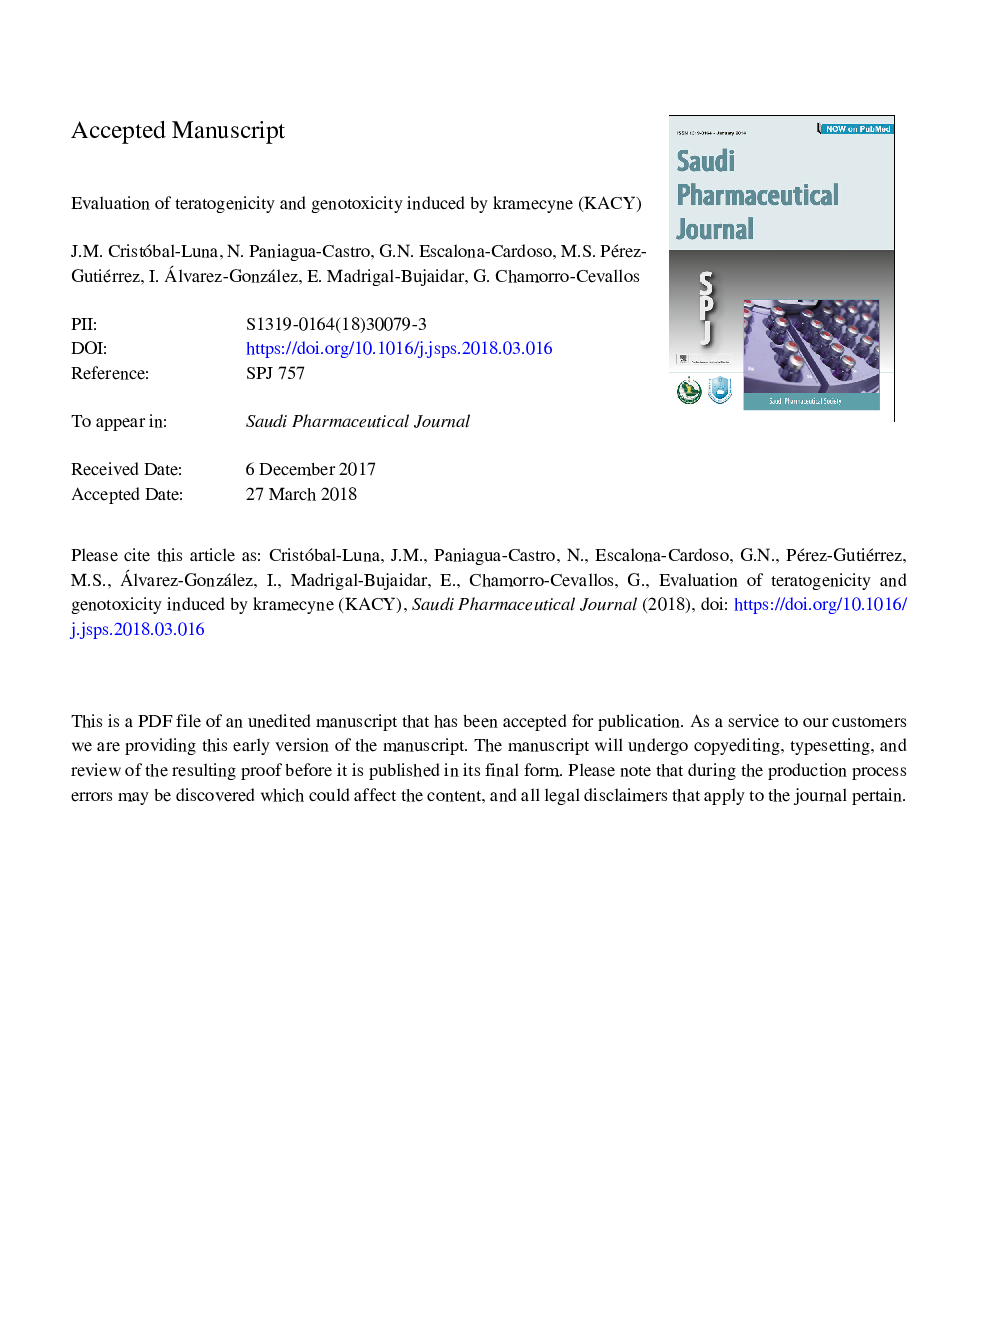 Evaluation of teratogenicity and genotoxicity induced by kramecyne (KACY)